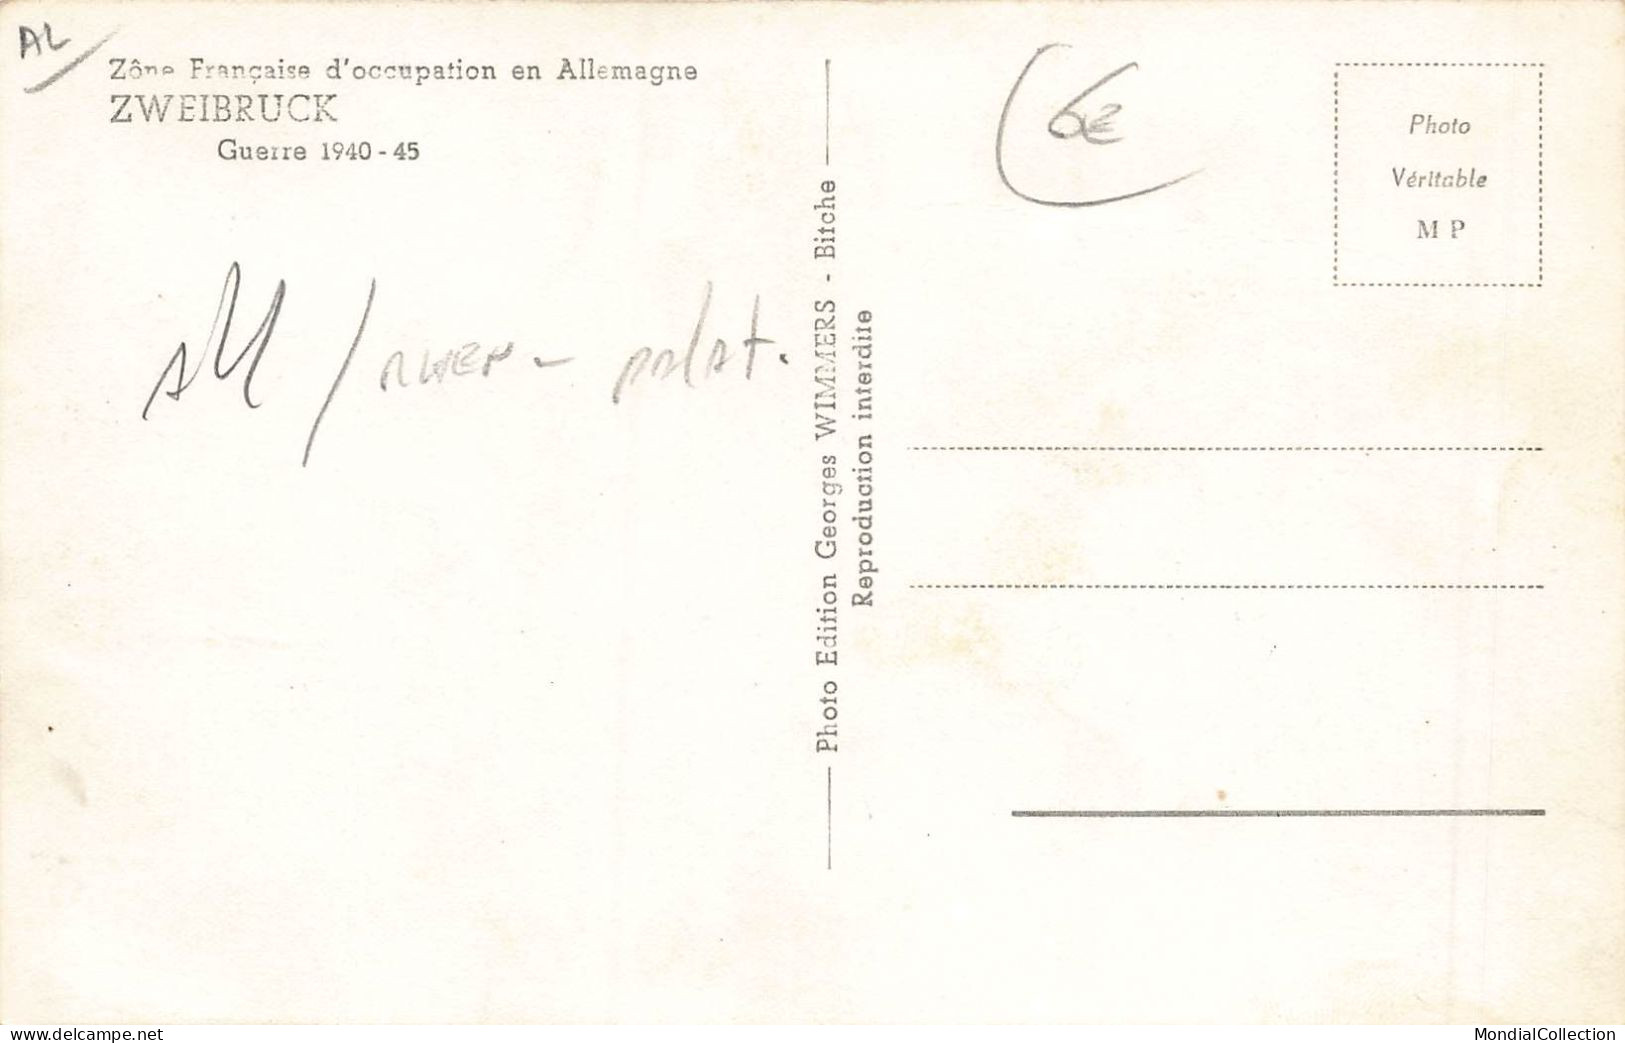 MIKIBP11-013- ALLEMAGNE ZWEIBRUCK ZONE FRANCAISE D OCCUPATION EN ALLEMAGNE GUERRE 1940-1945 - Zweibruecken